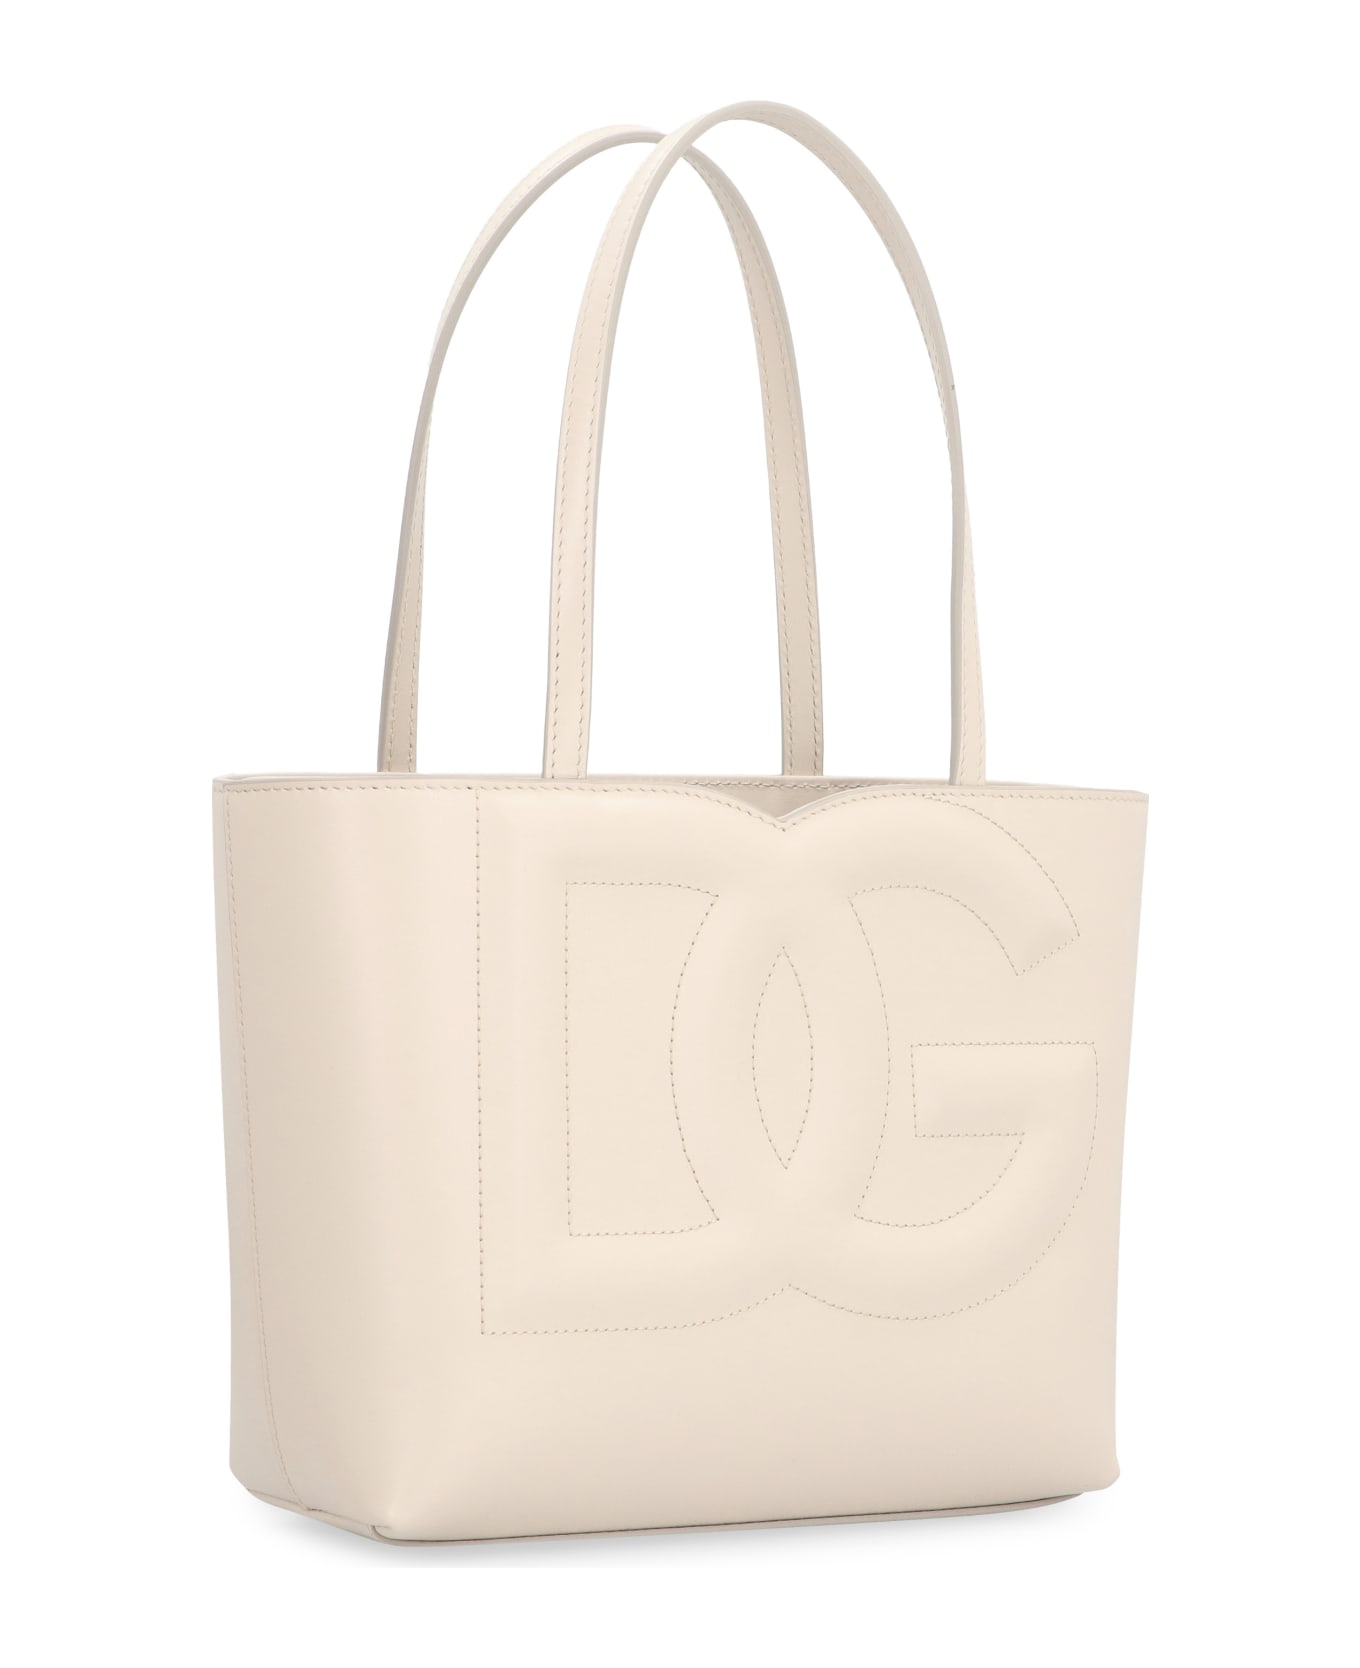 Dolce & Gabbana Logo Leather Tote - Ivory